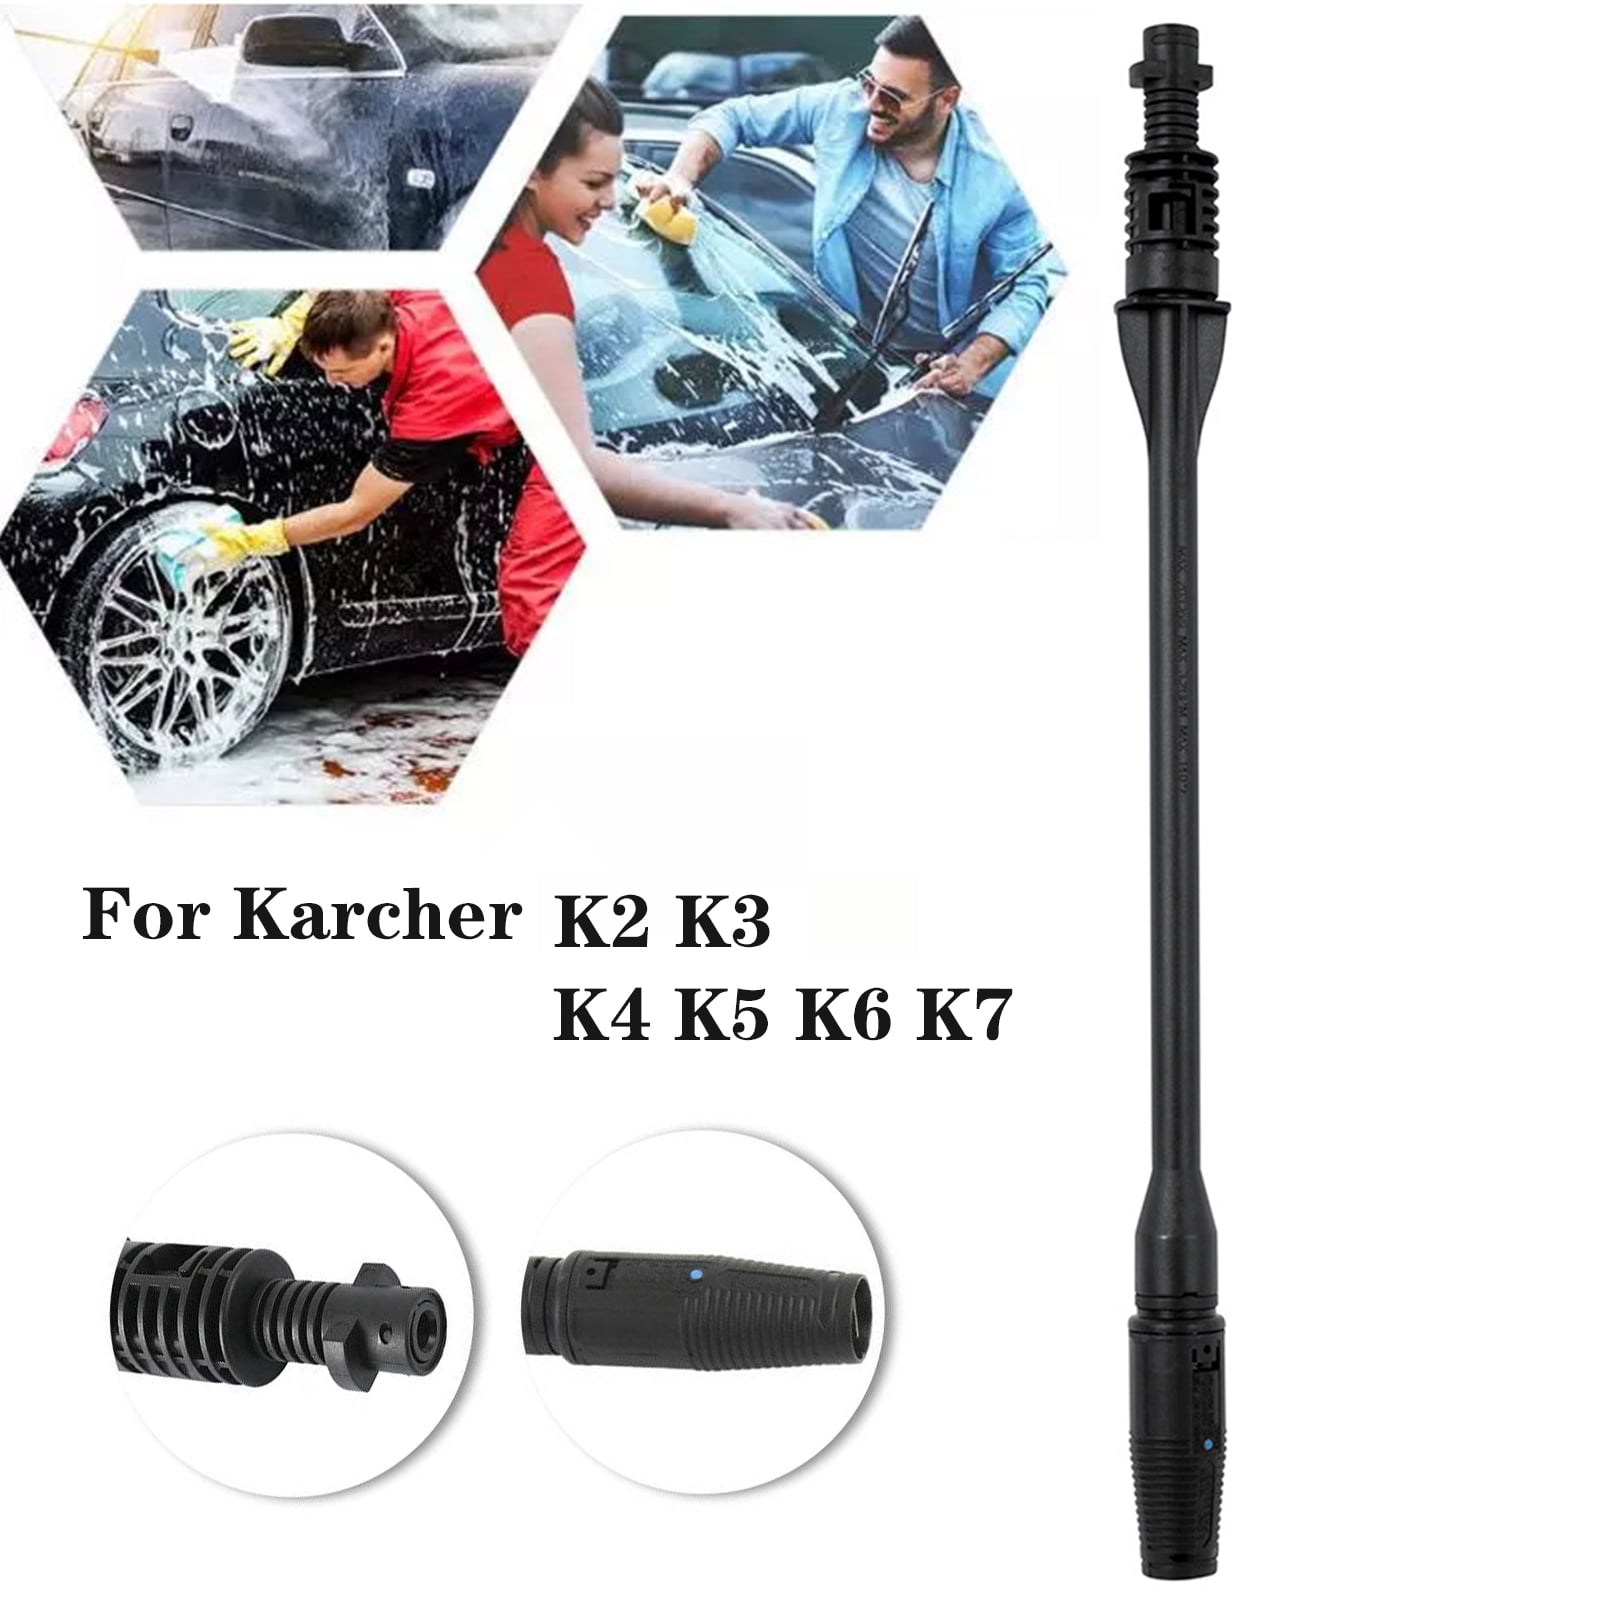 GIlH 140bar Lance Nozzle for Karcher Dirtblaster K2 K3 K4 K5 Pressure Washer Tool